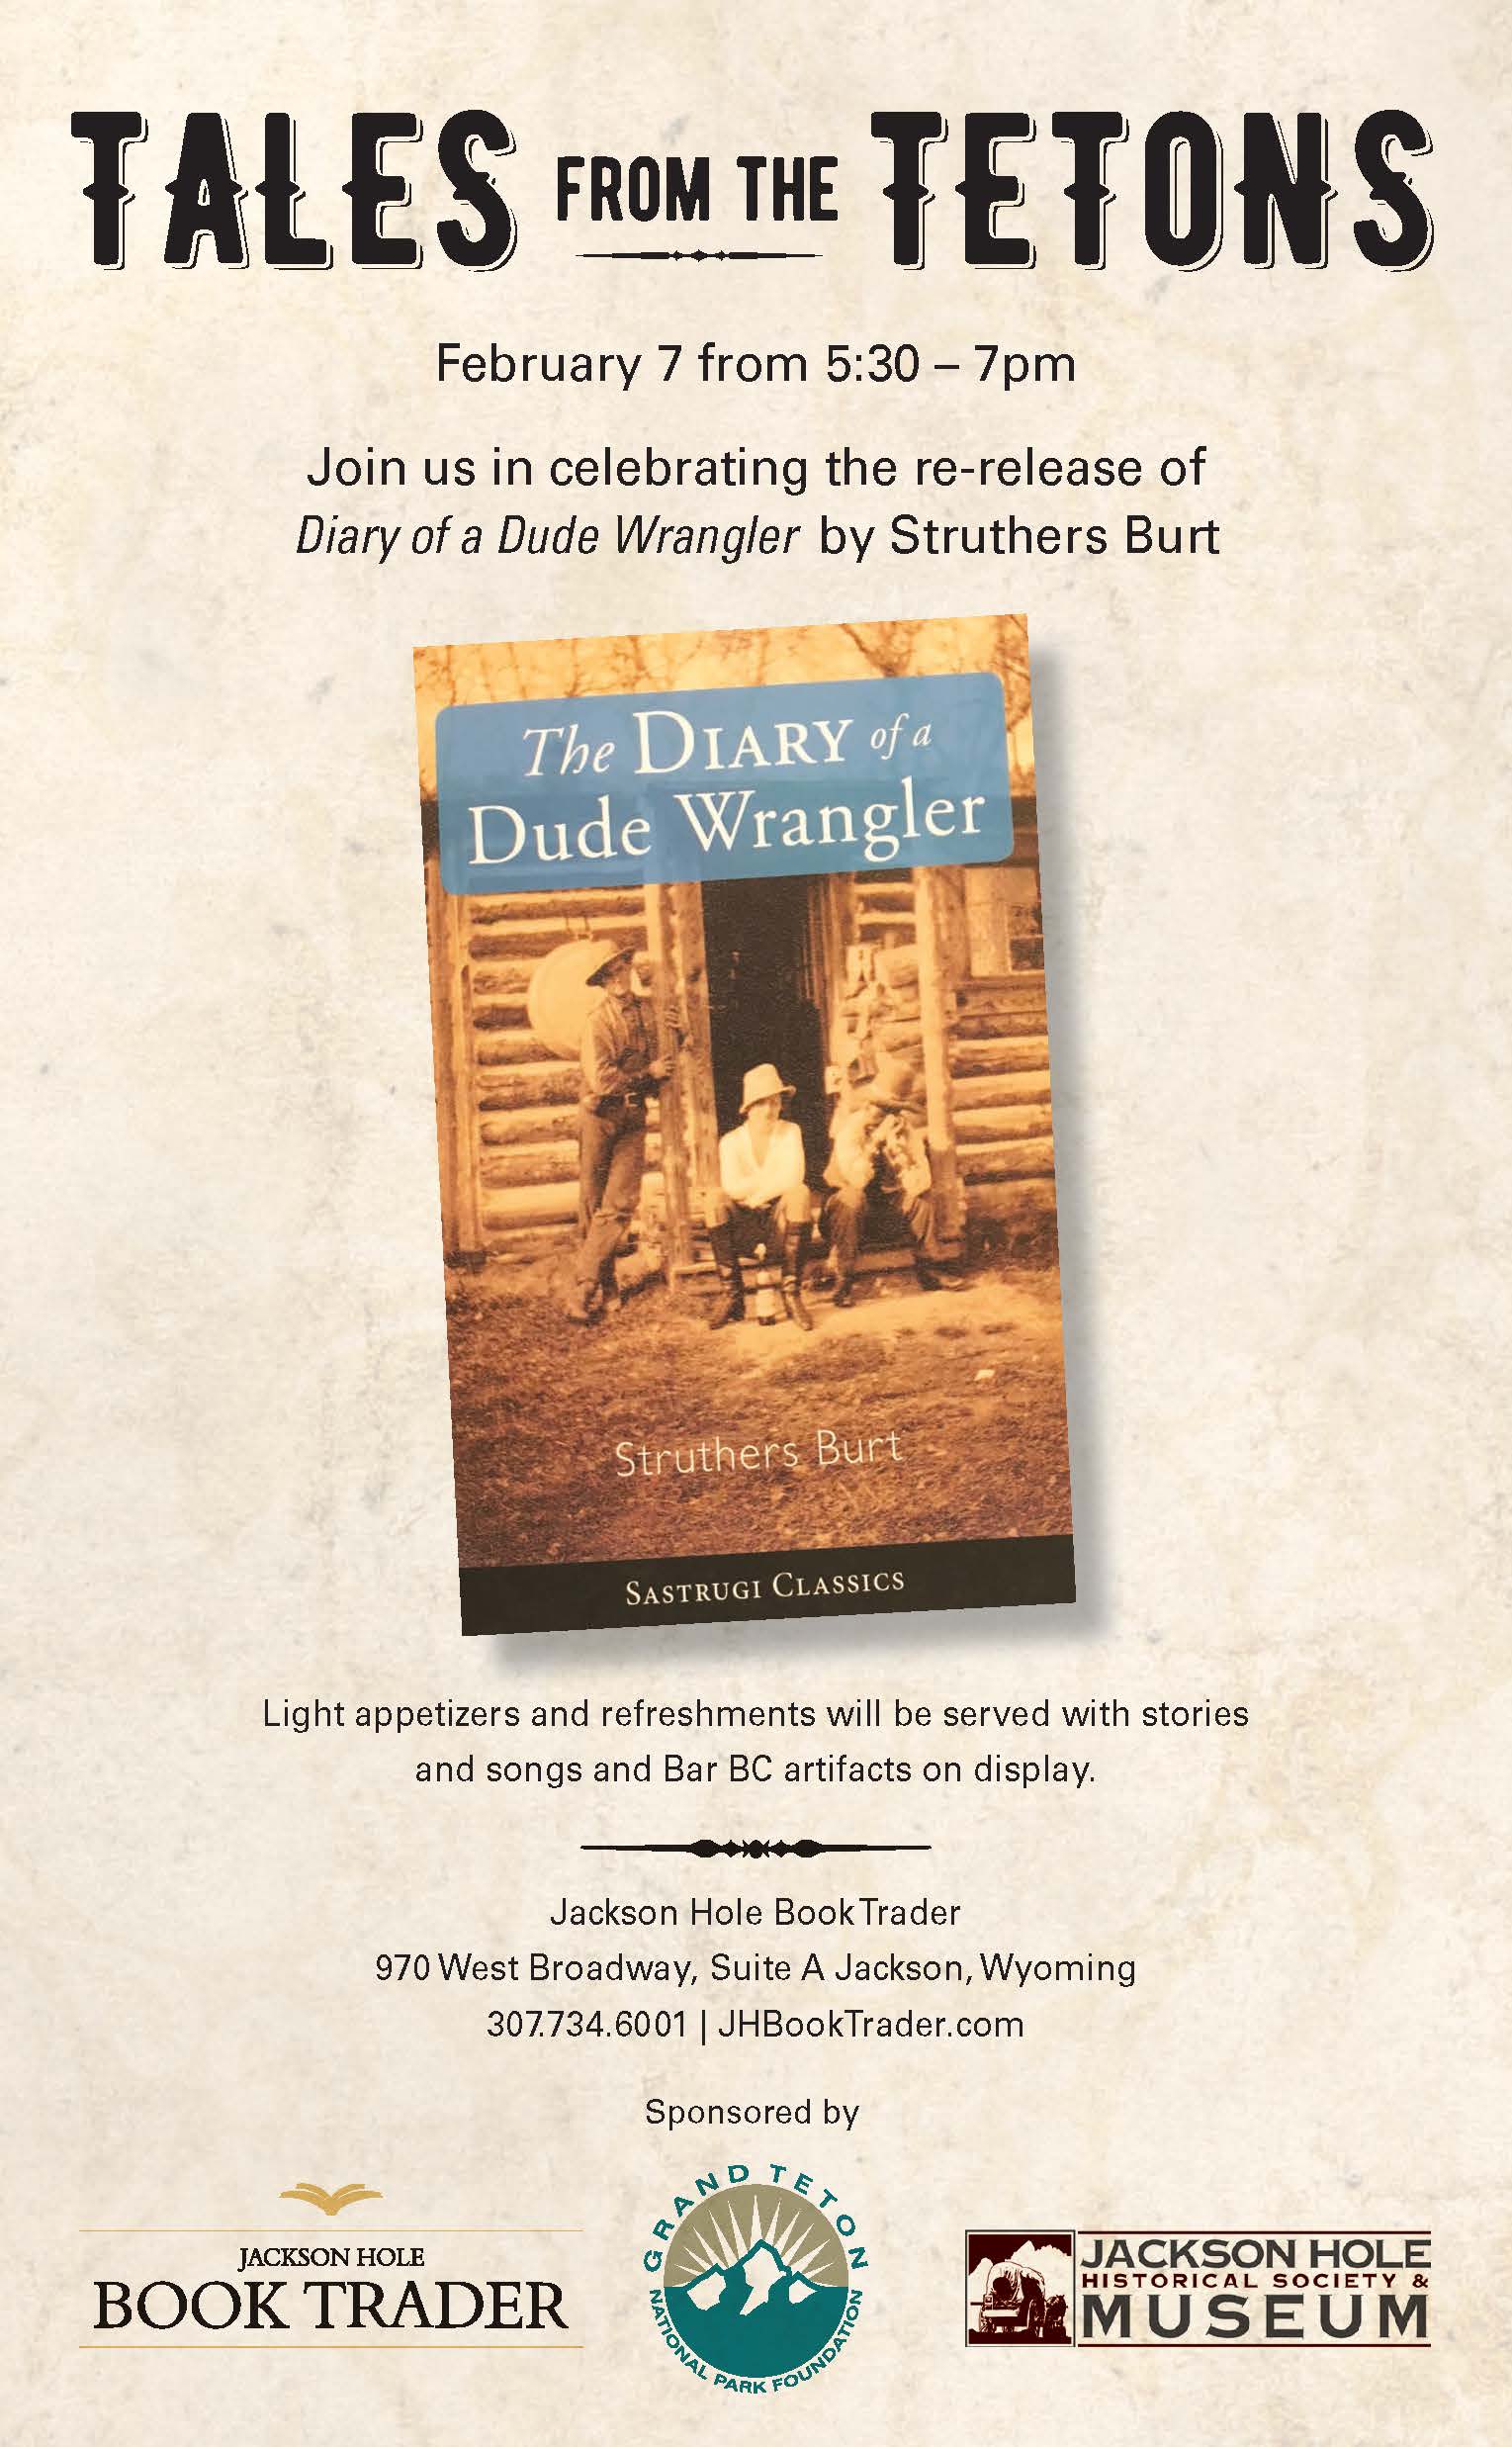 The Diary of a Dude Wrangler